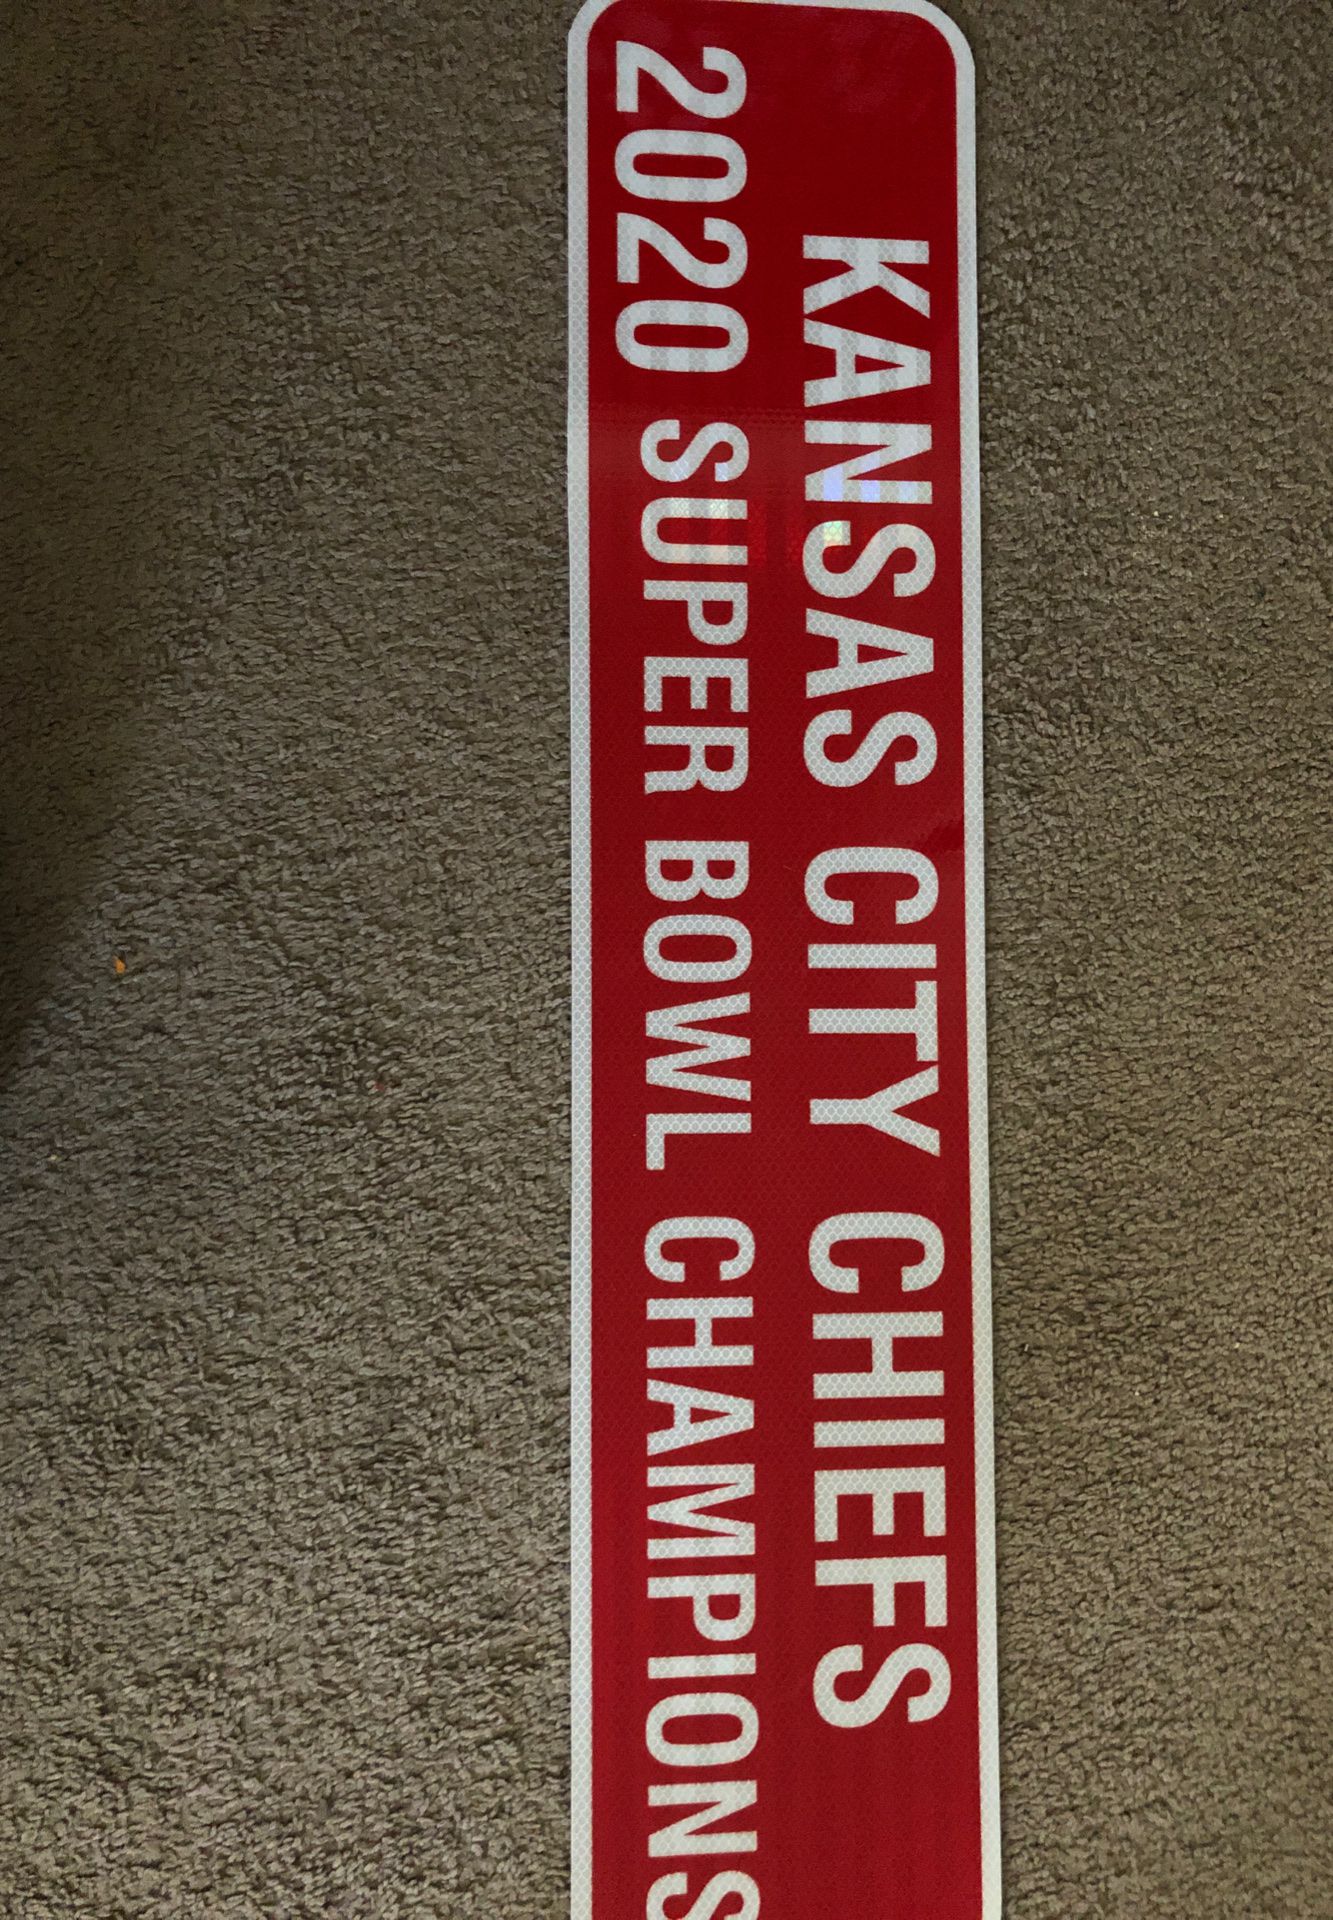 Kansas City chiefs street sign